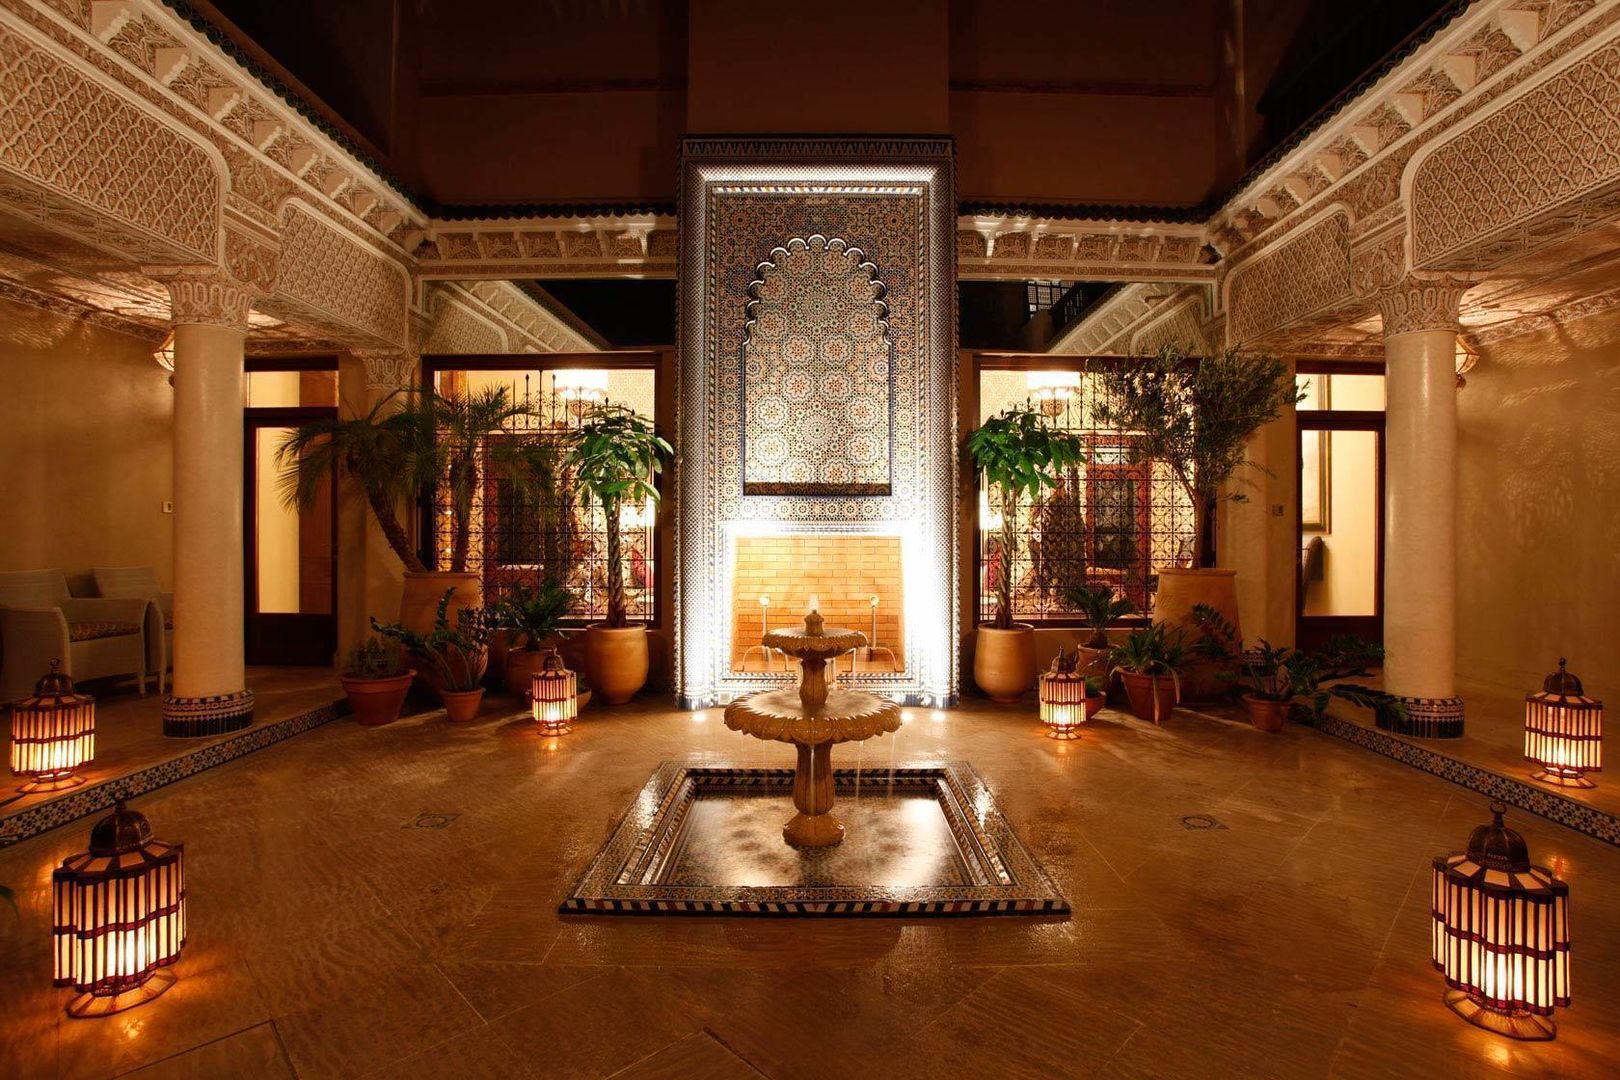 Private Villa, Morocco, Moroccan Bazaar Moroccan Bazaar 地中海スタイル 壁&床 壁＆床カバー